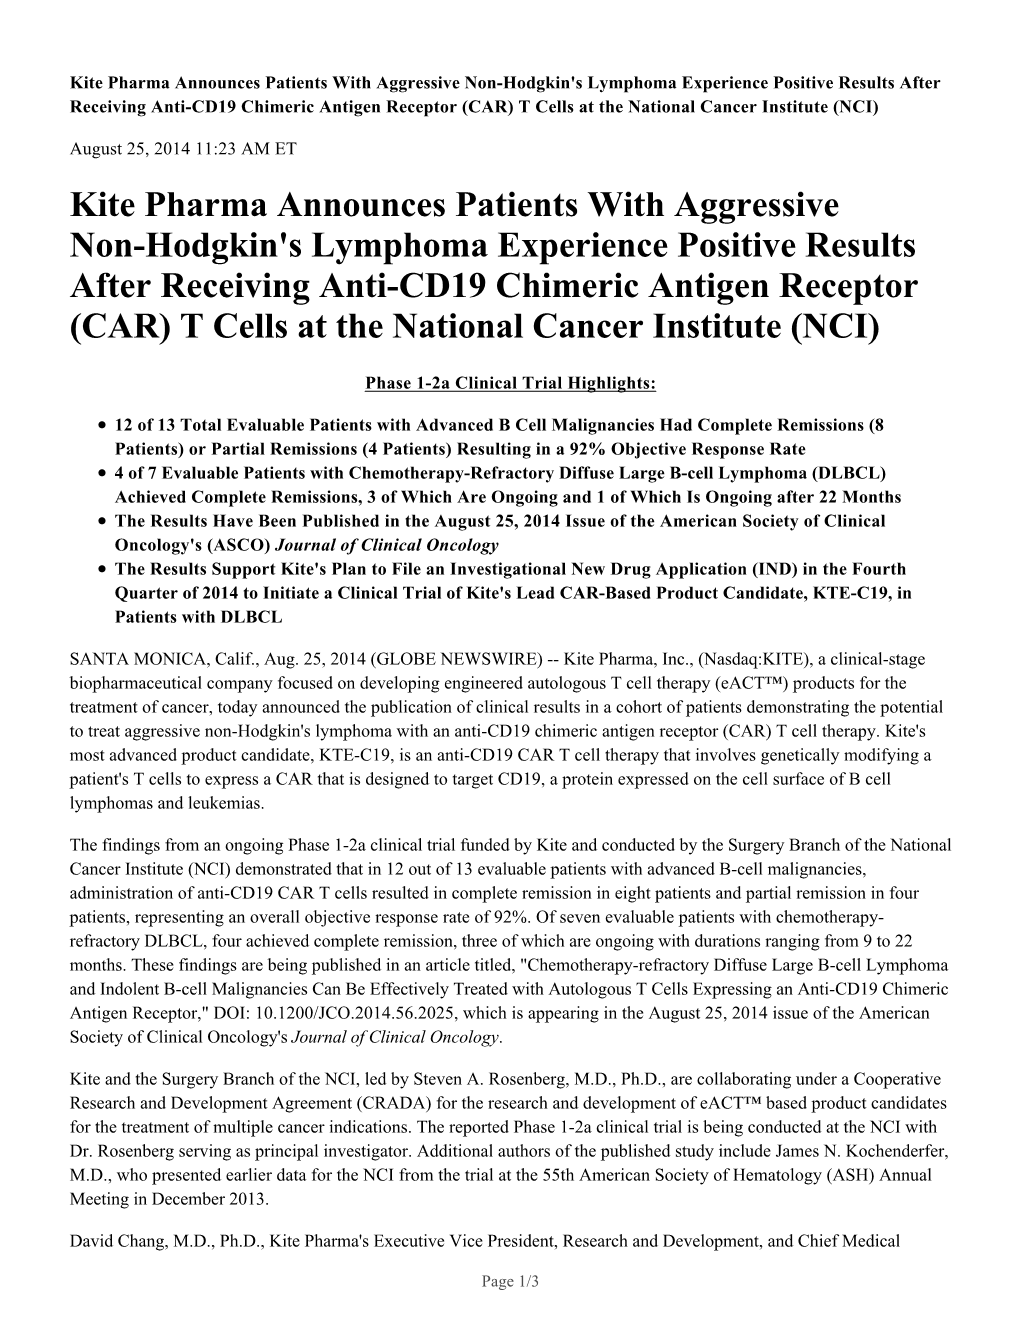 Kite Pharma Announces Patients with Aggressive Non-Hodgkin's